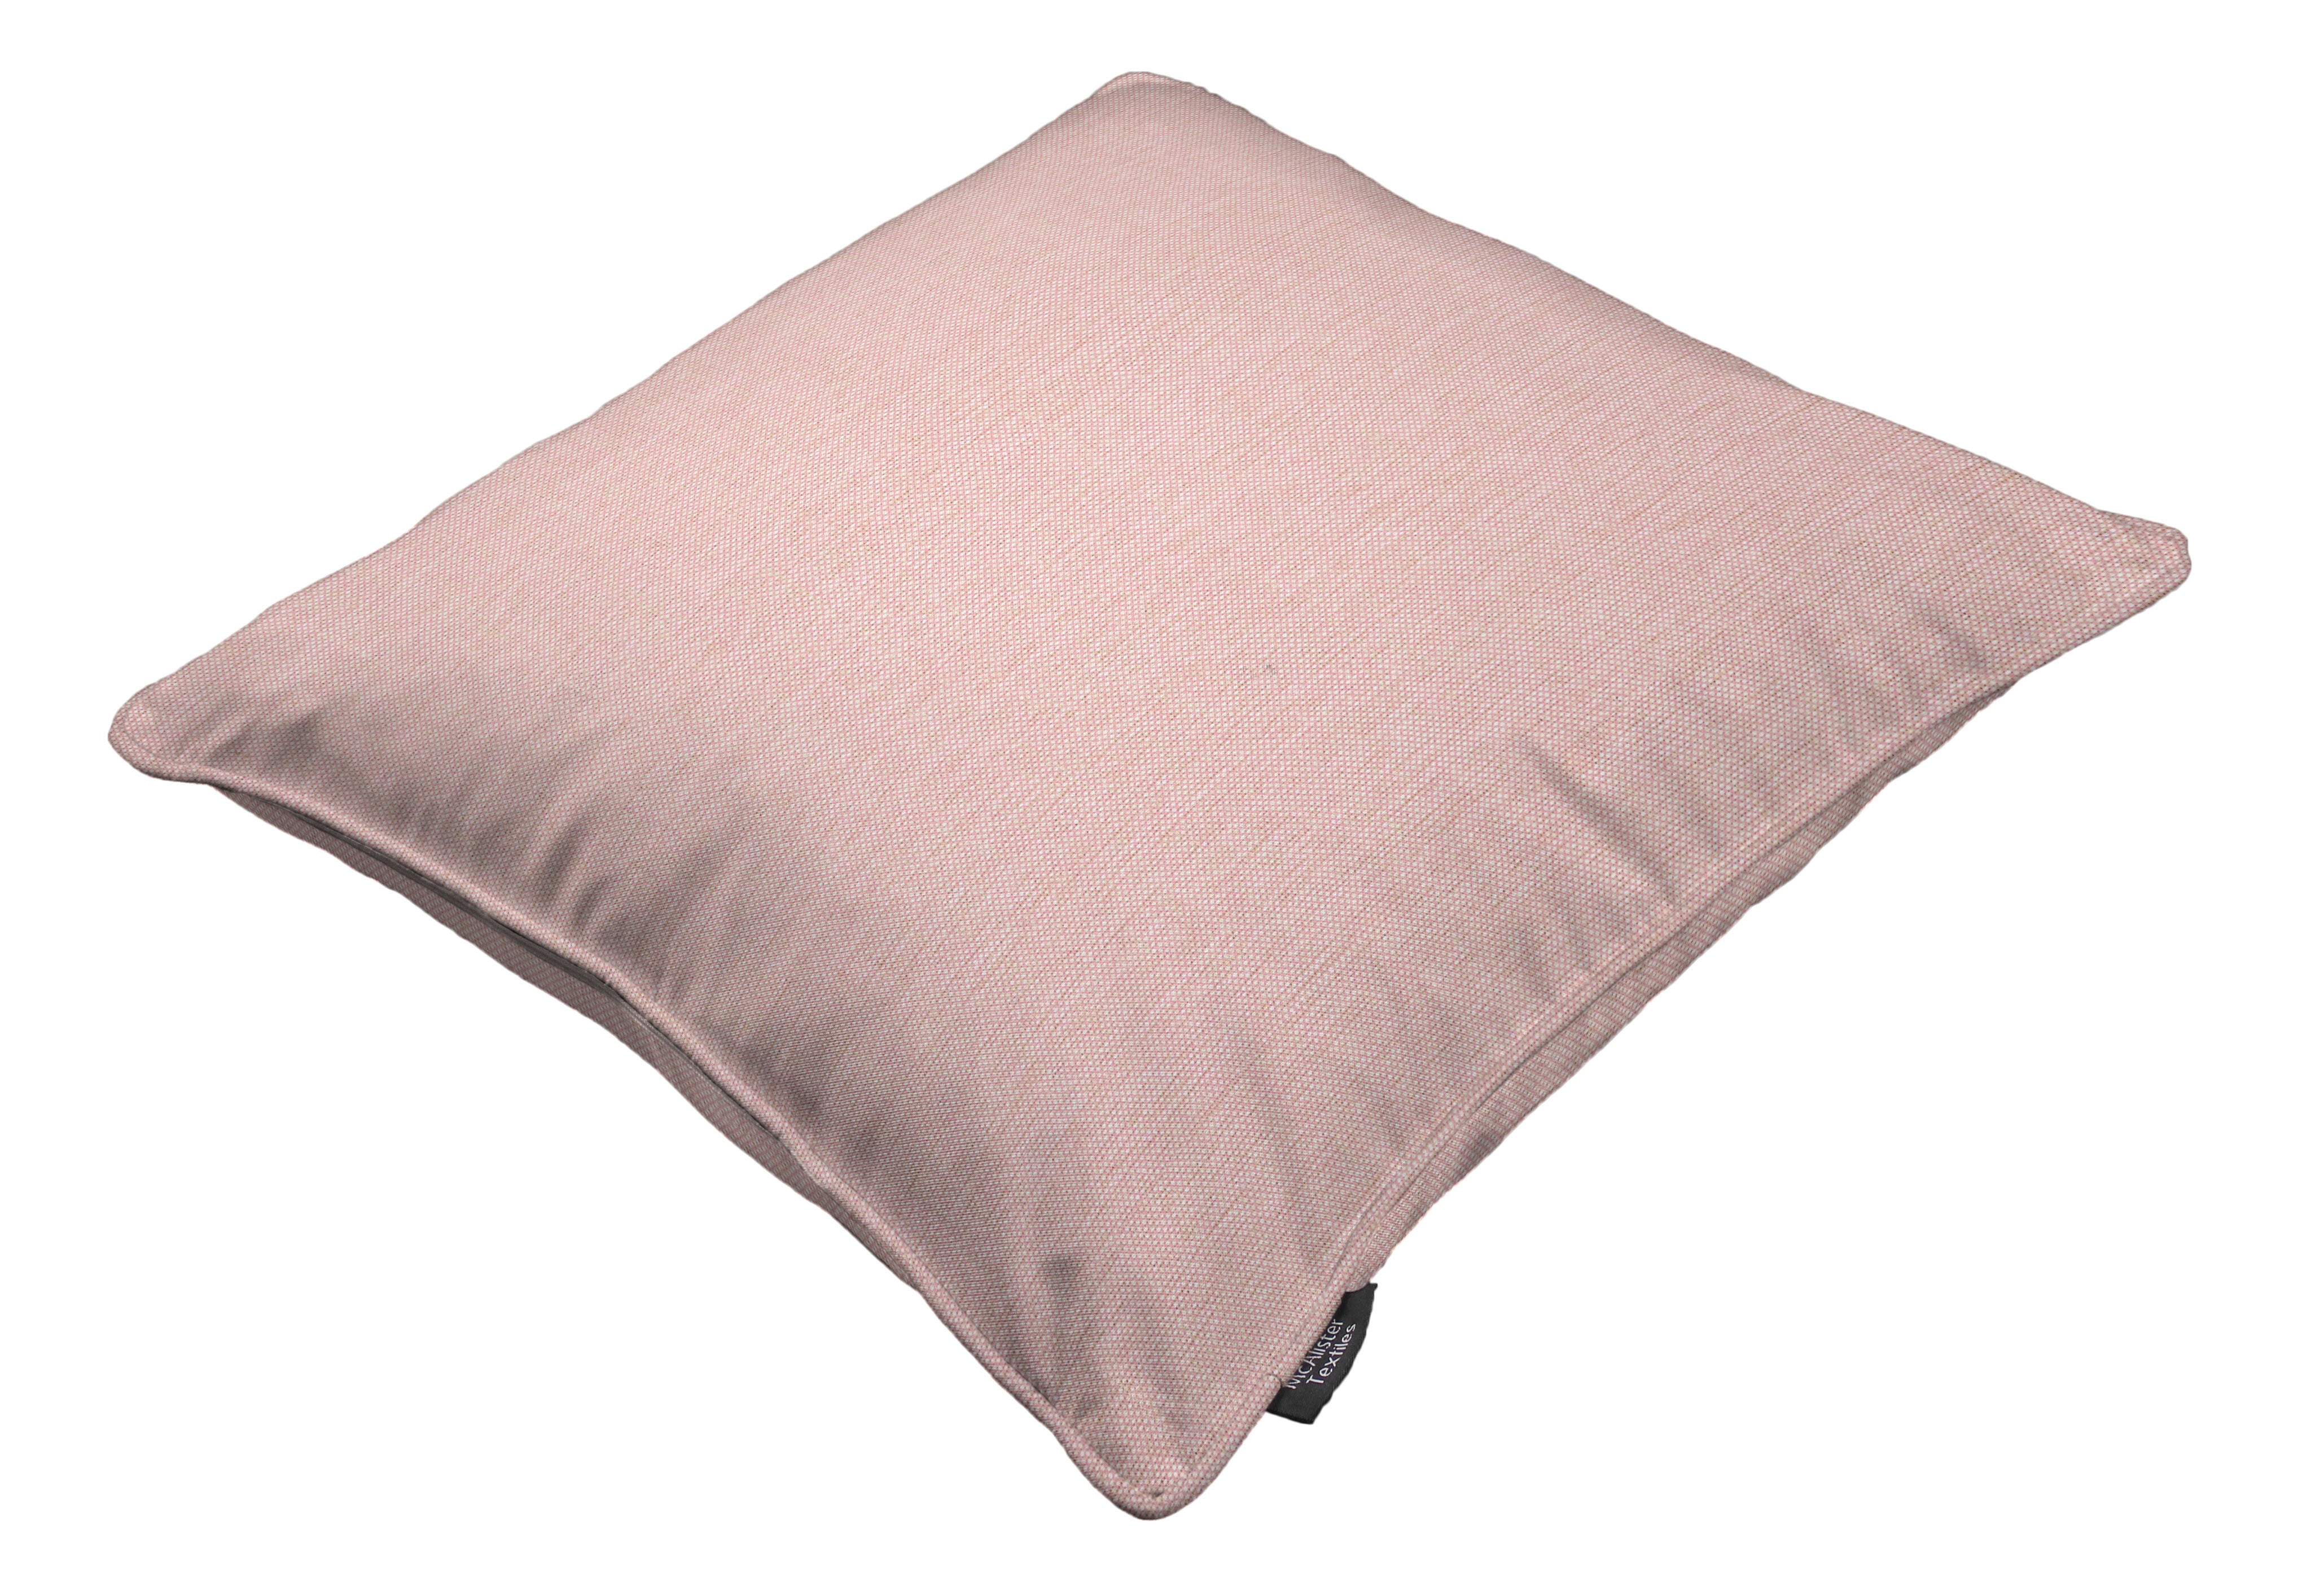 Albany Blush Pink Piped Cushion